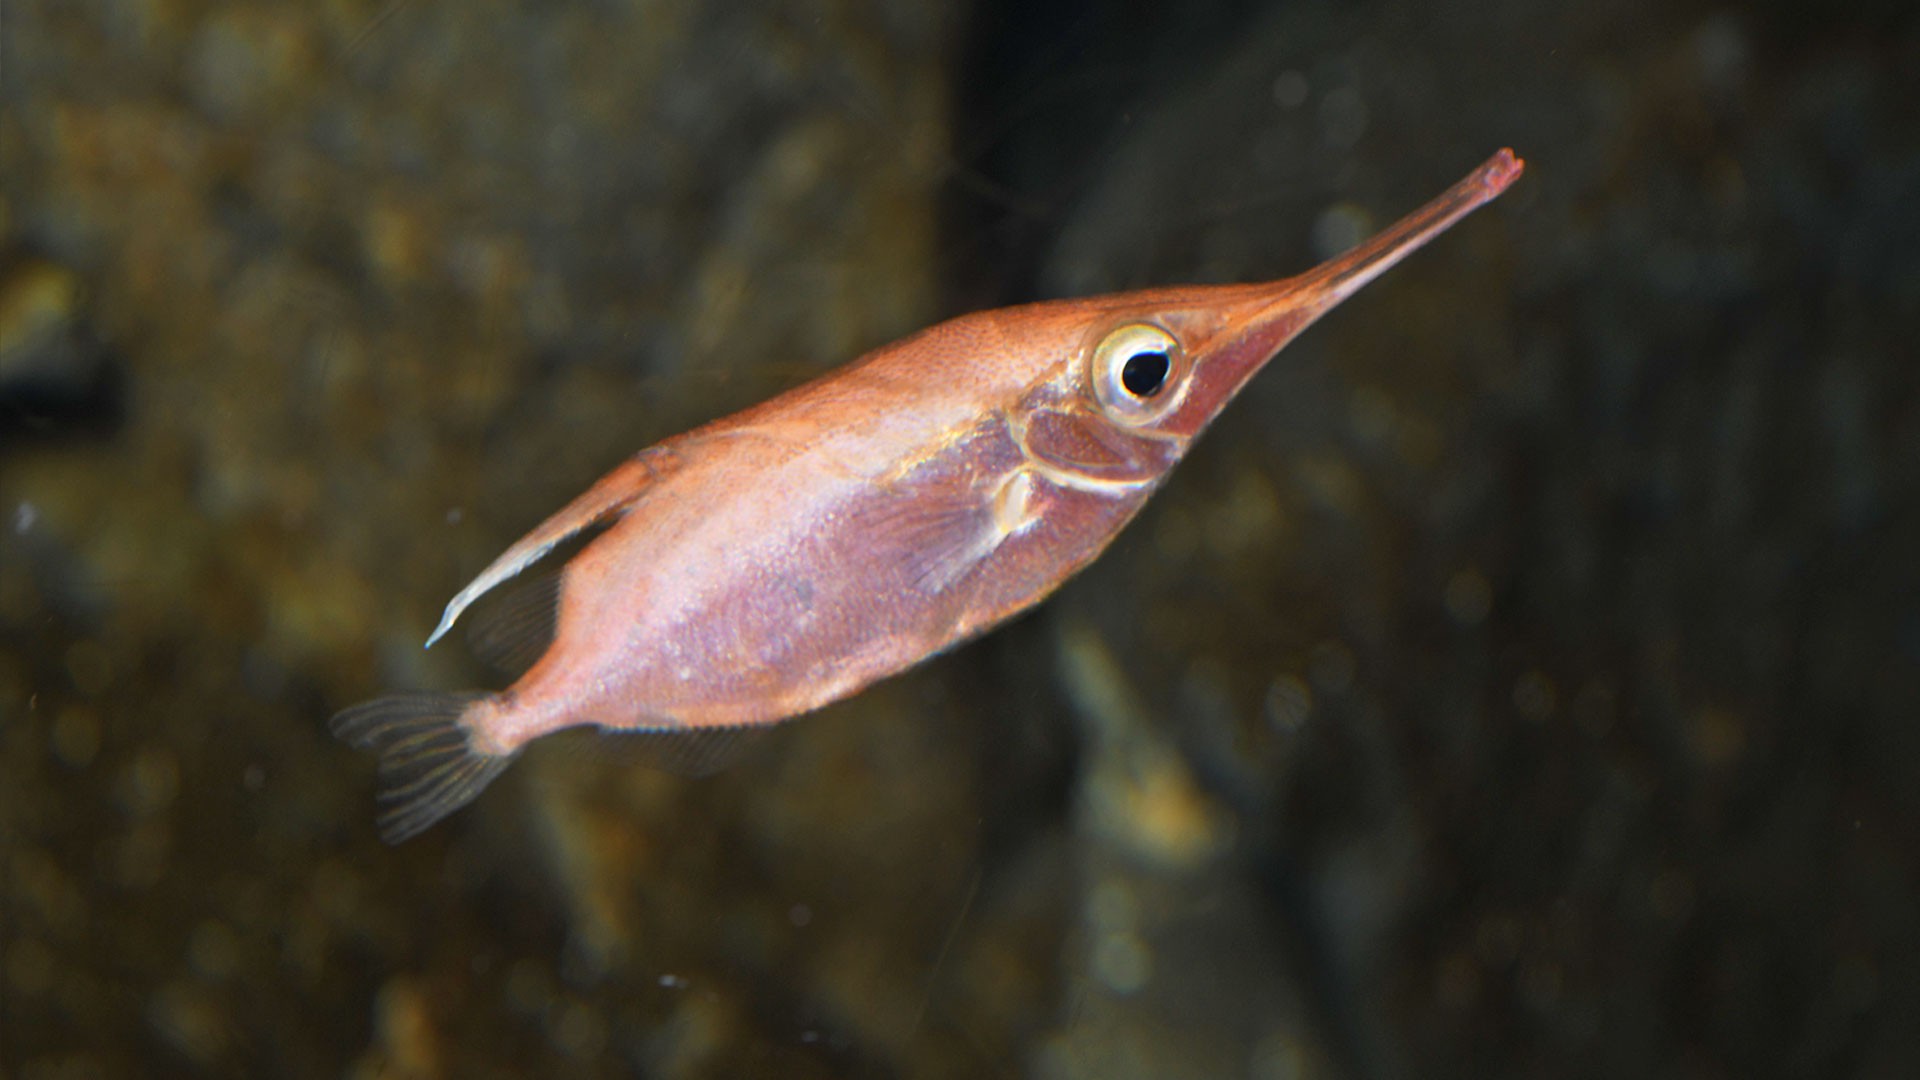 Trumpetfish